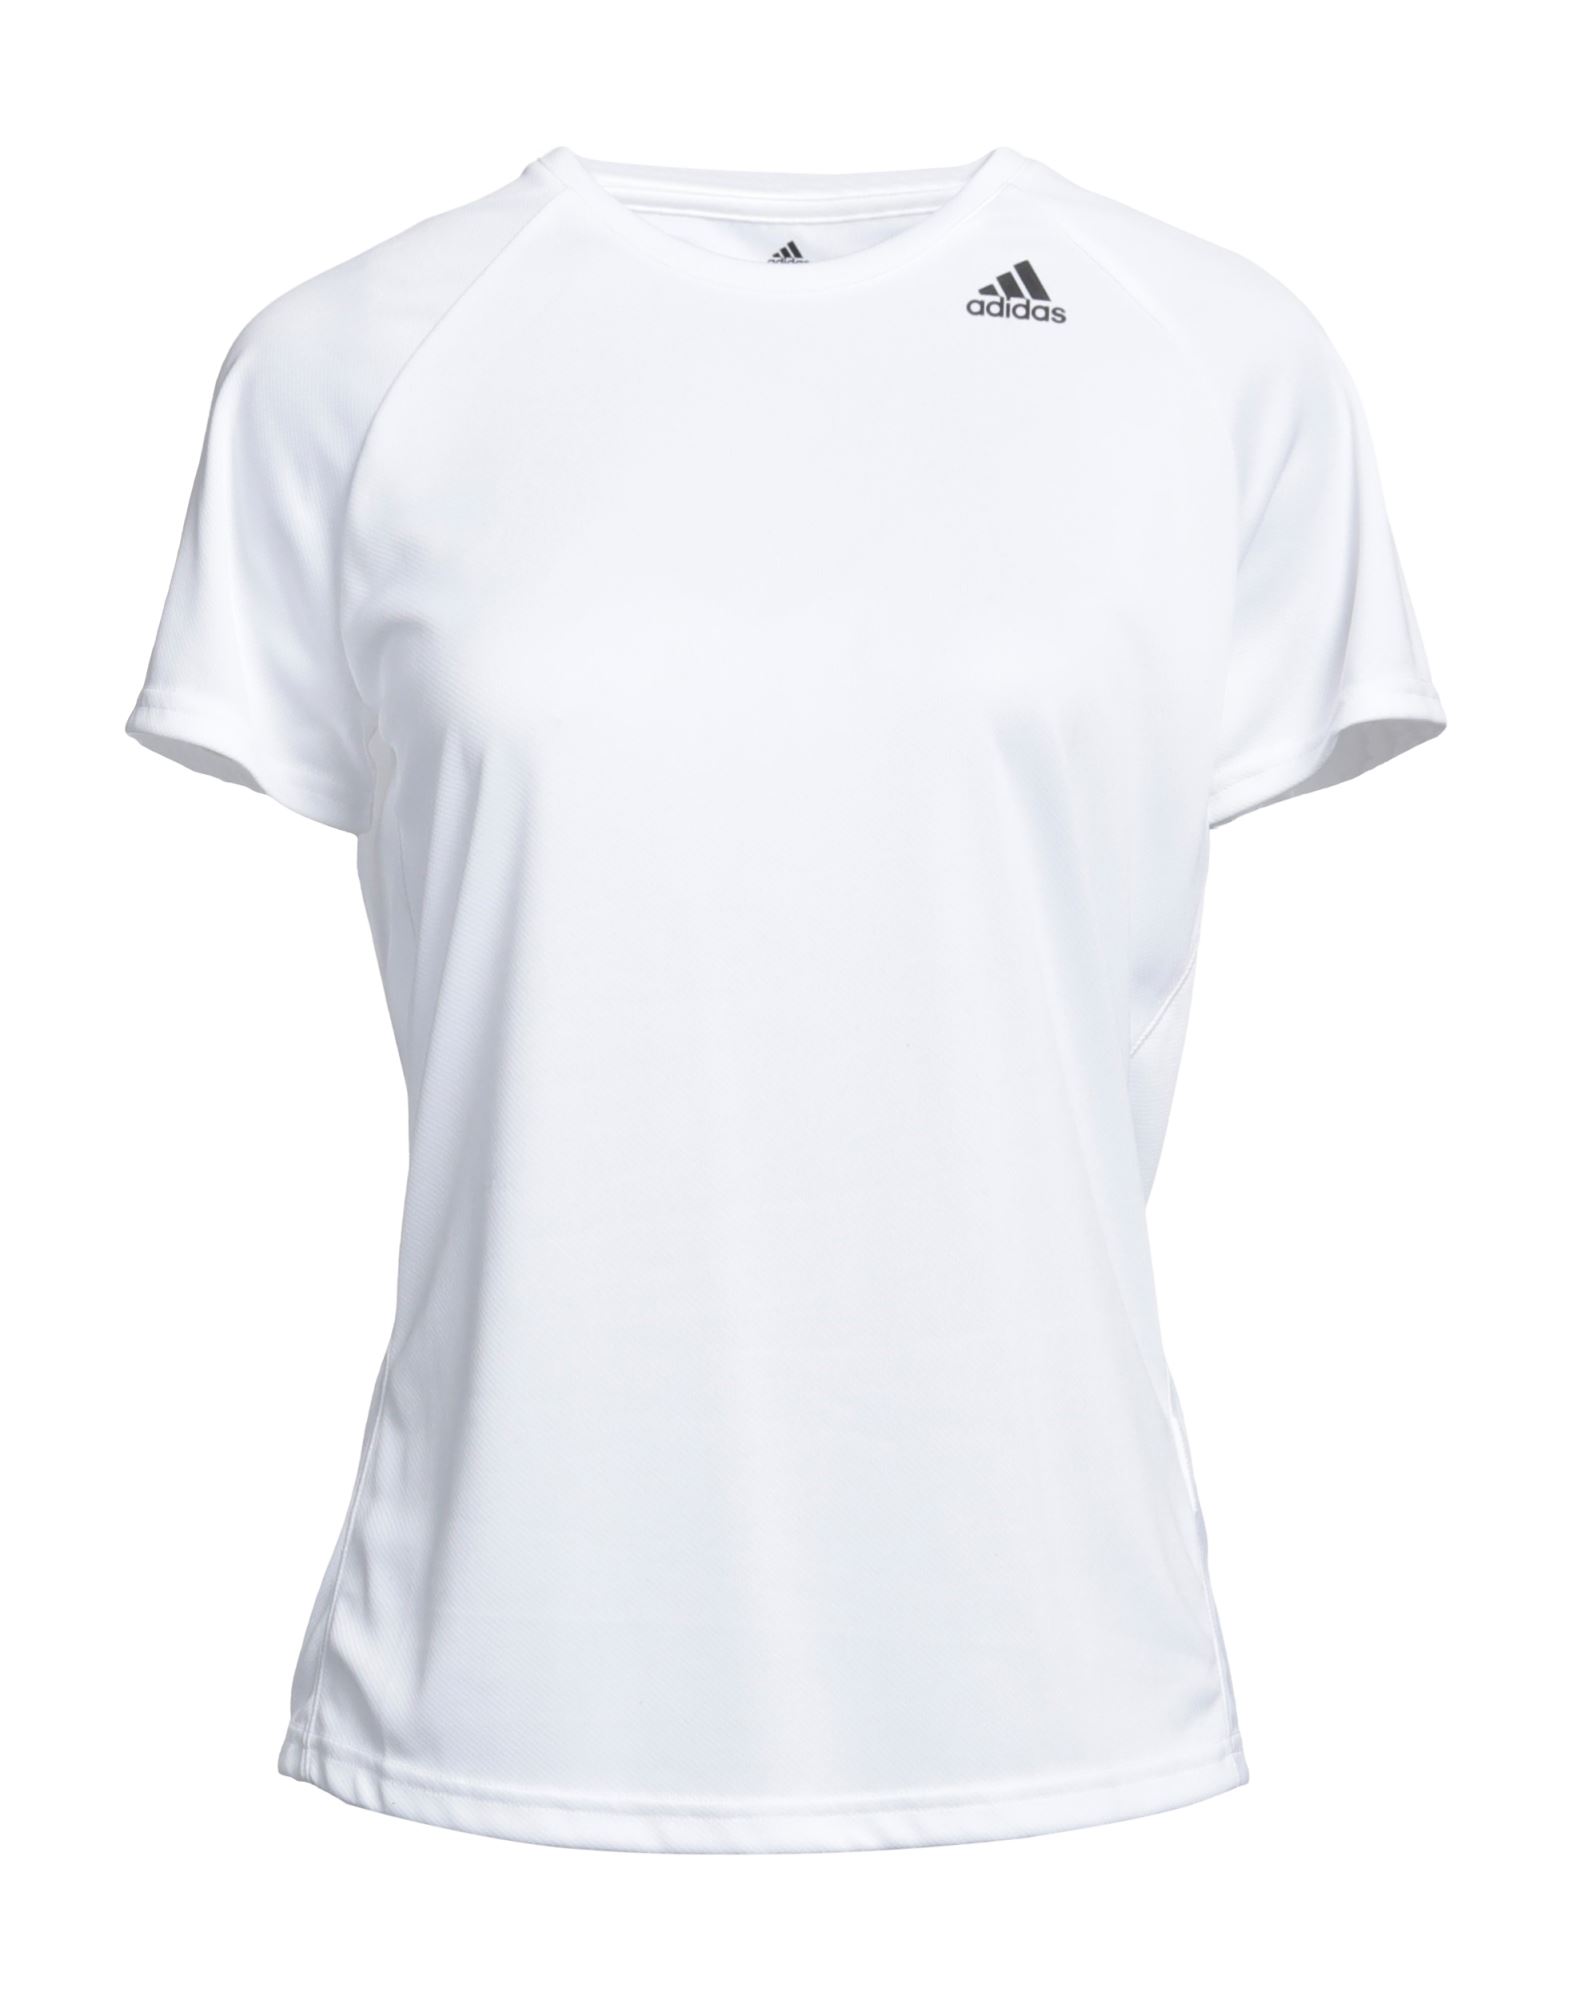 Adidas Originals T-shirts In White